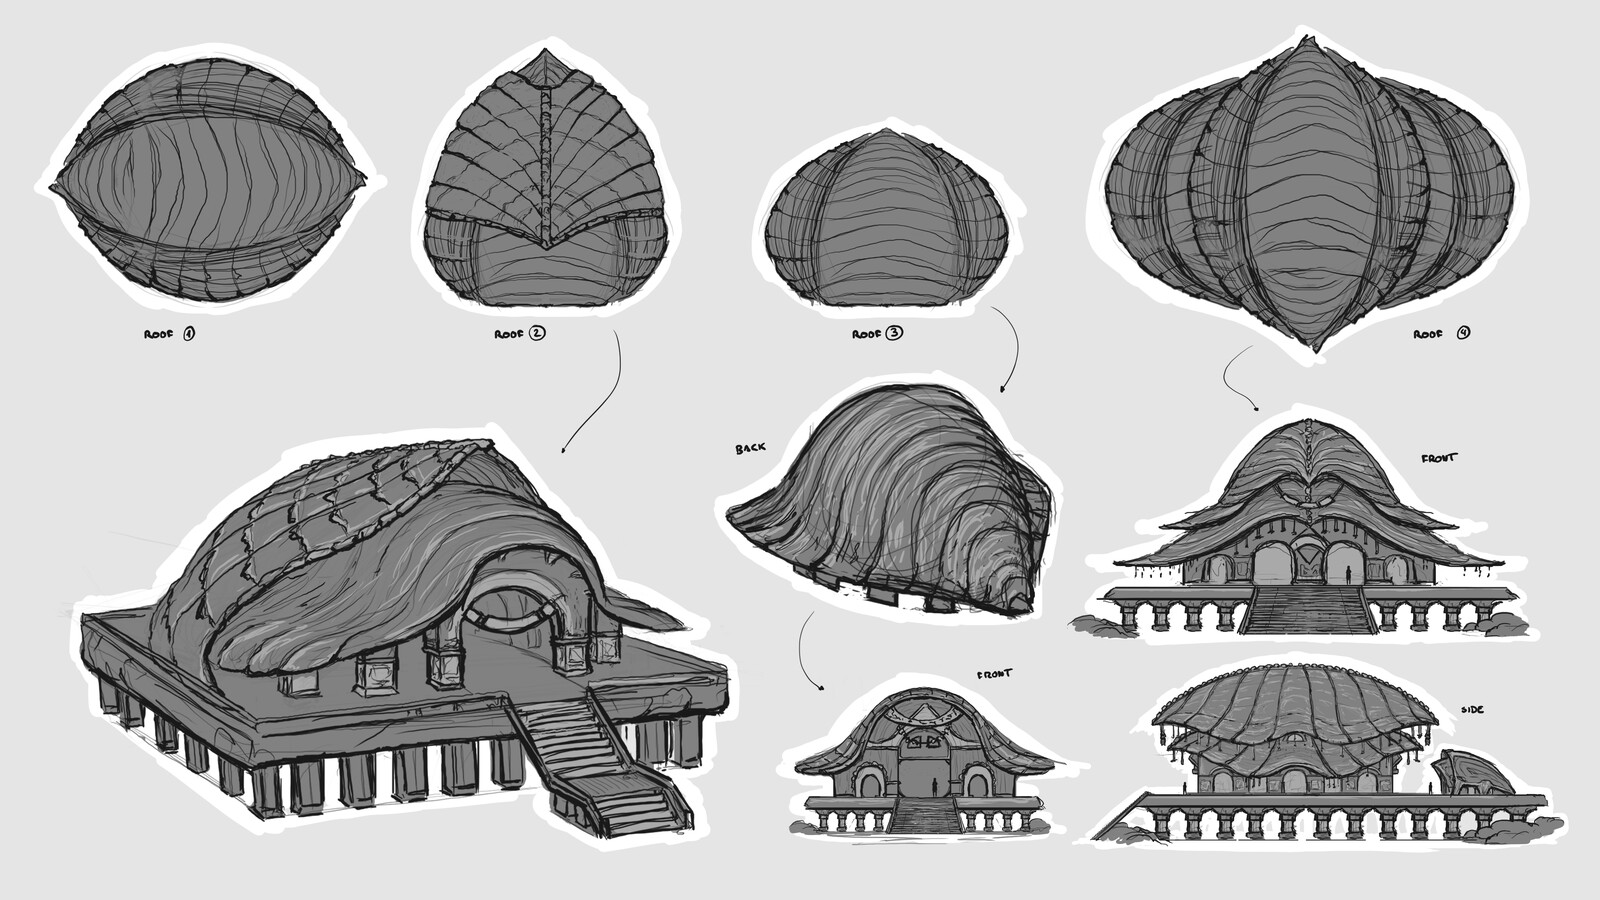 Roof design exploration sketches